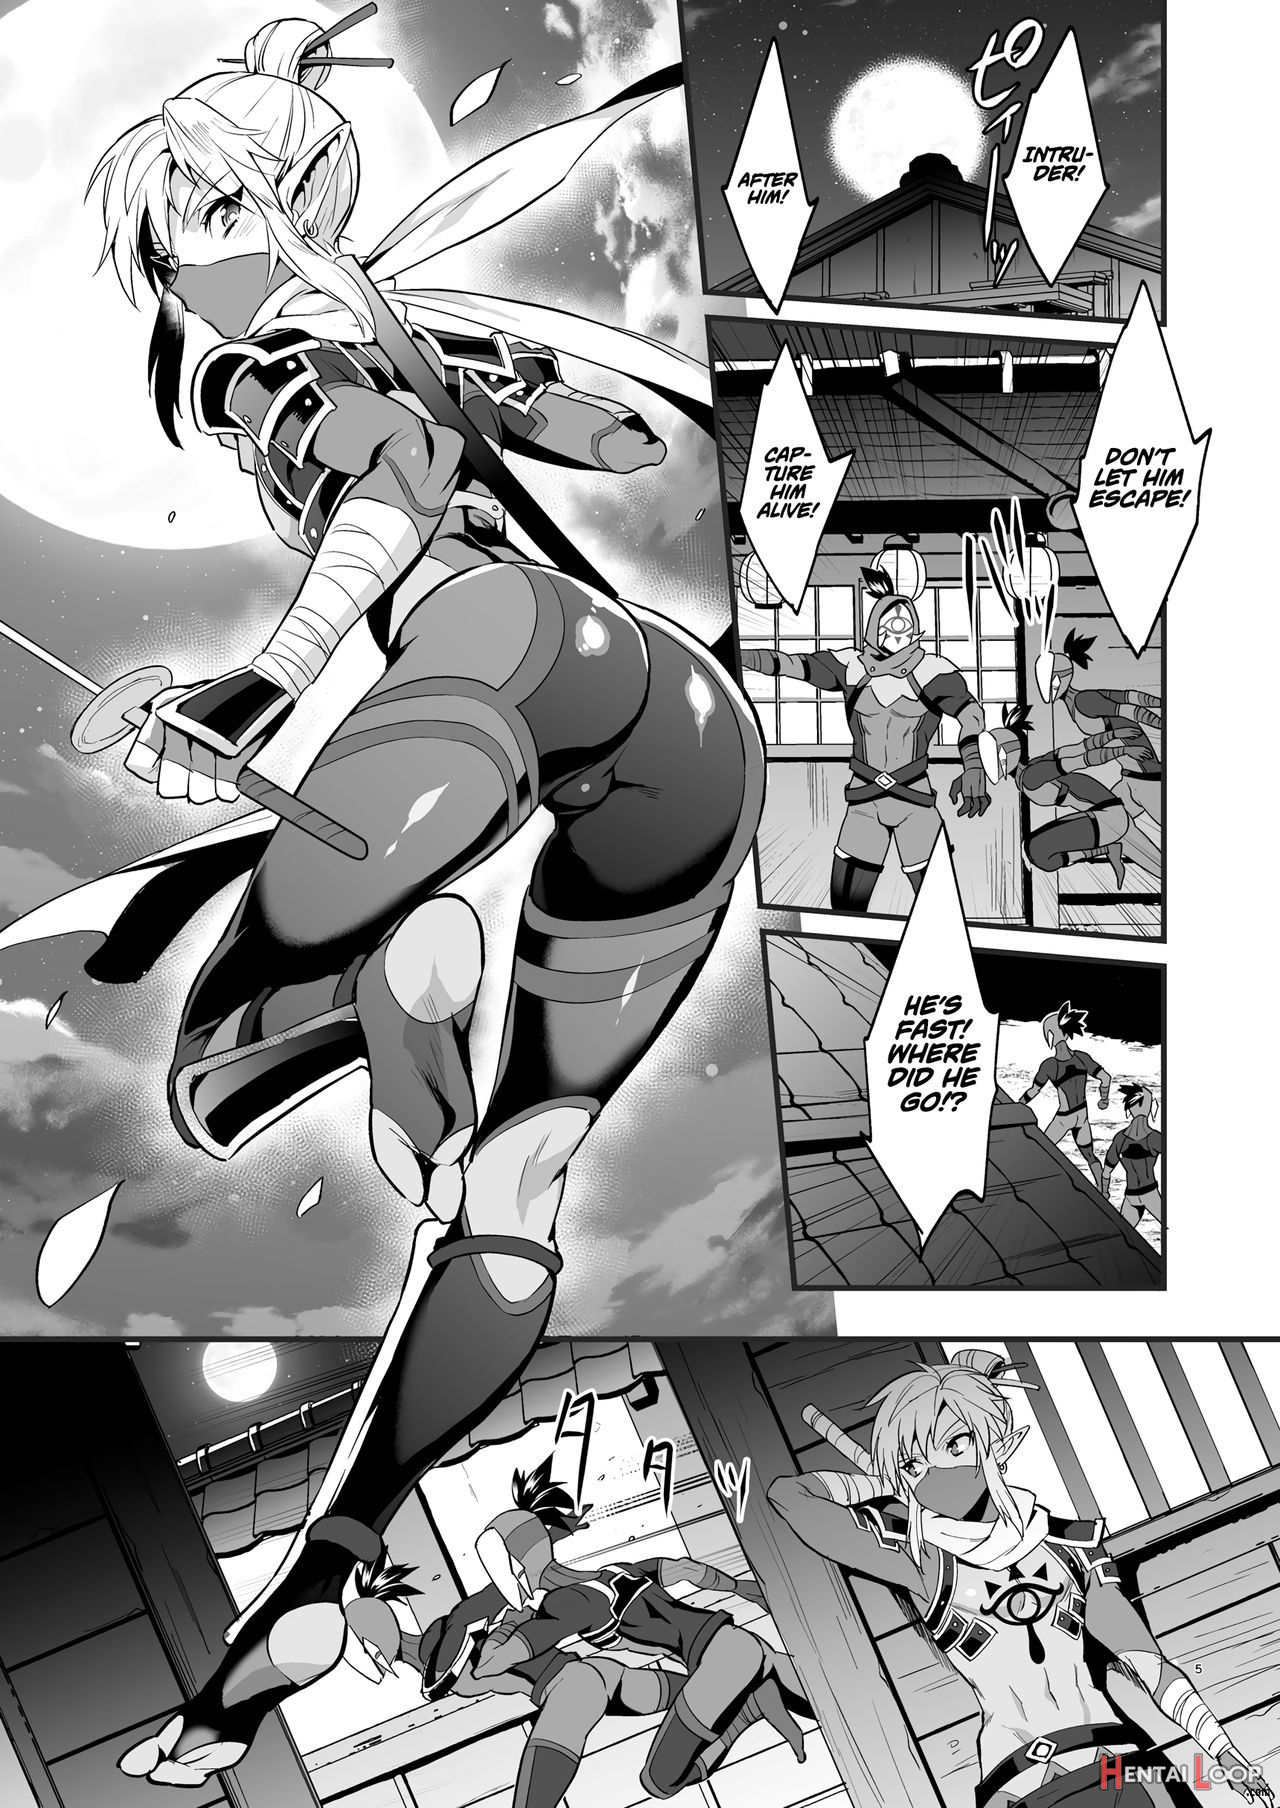 The Champion's Ninja Side Story page 3